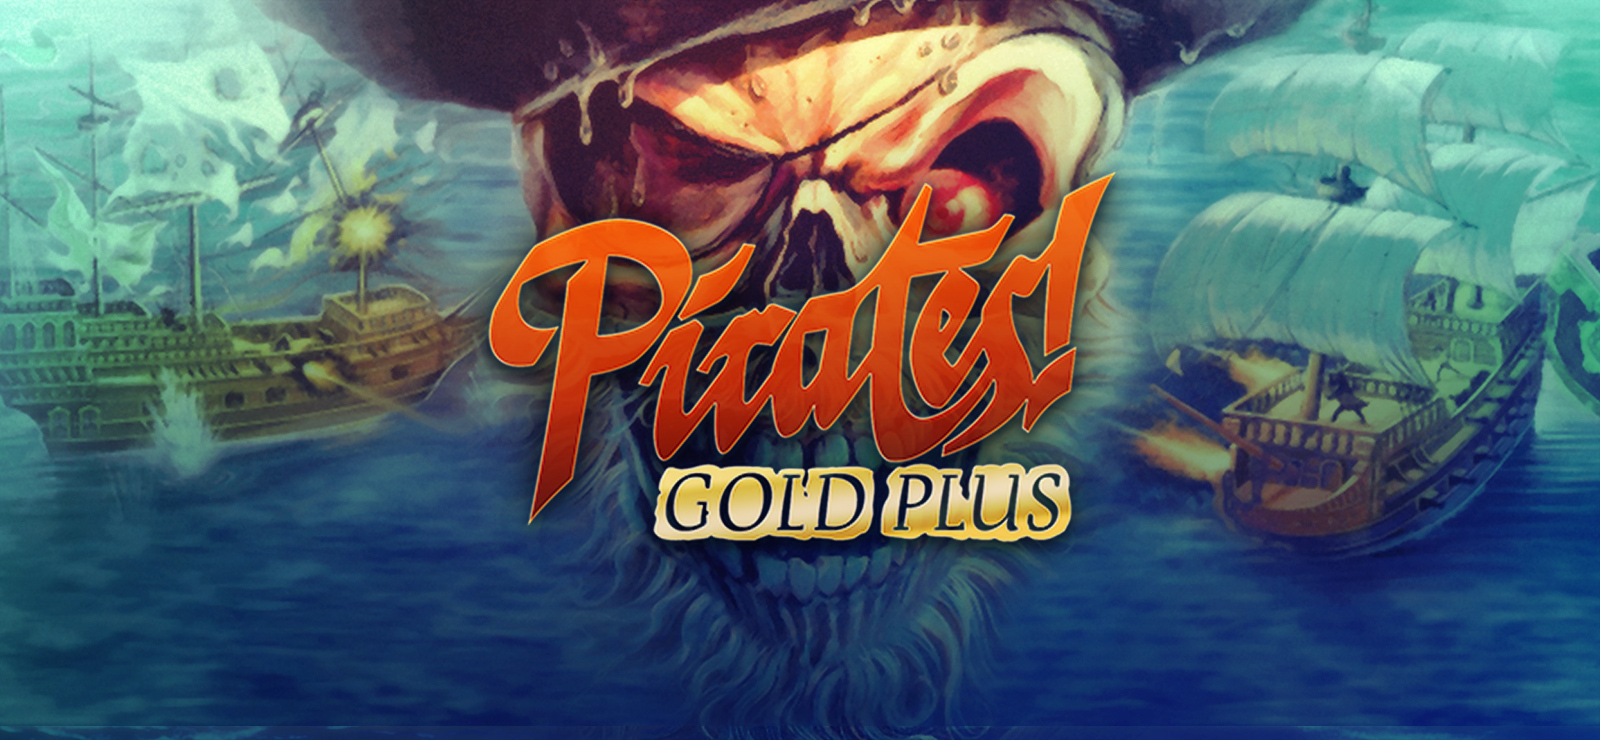 Download & Play Pirate Raid - Caribbean Battle on PC & Mac (Emulator)